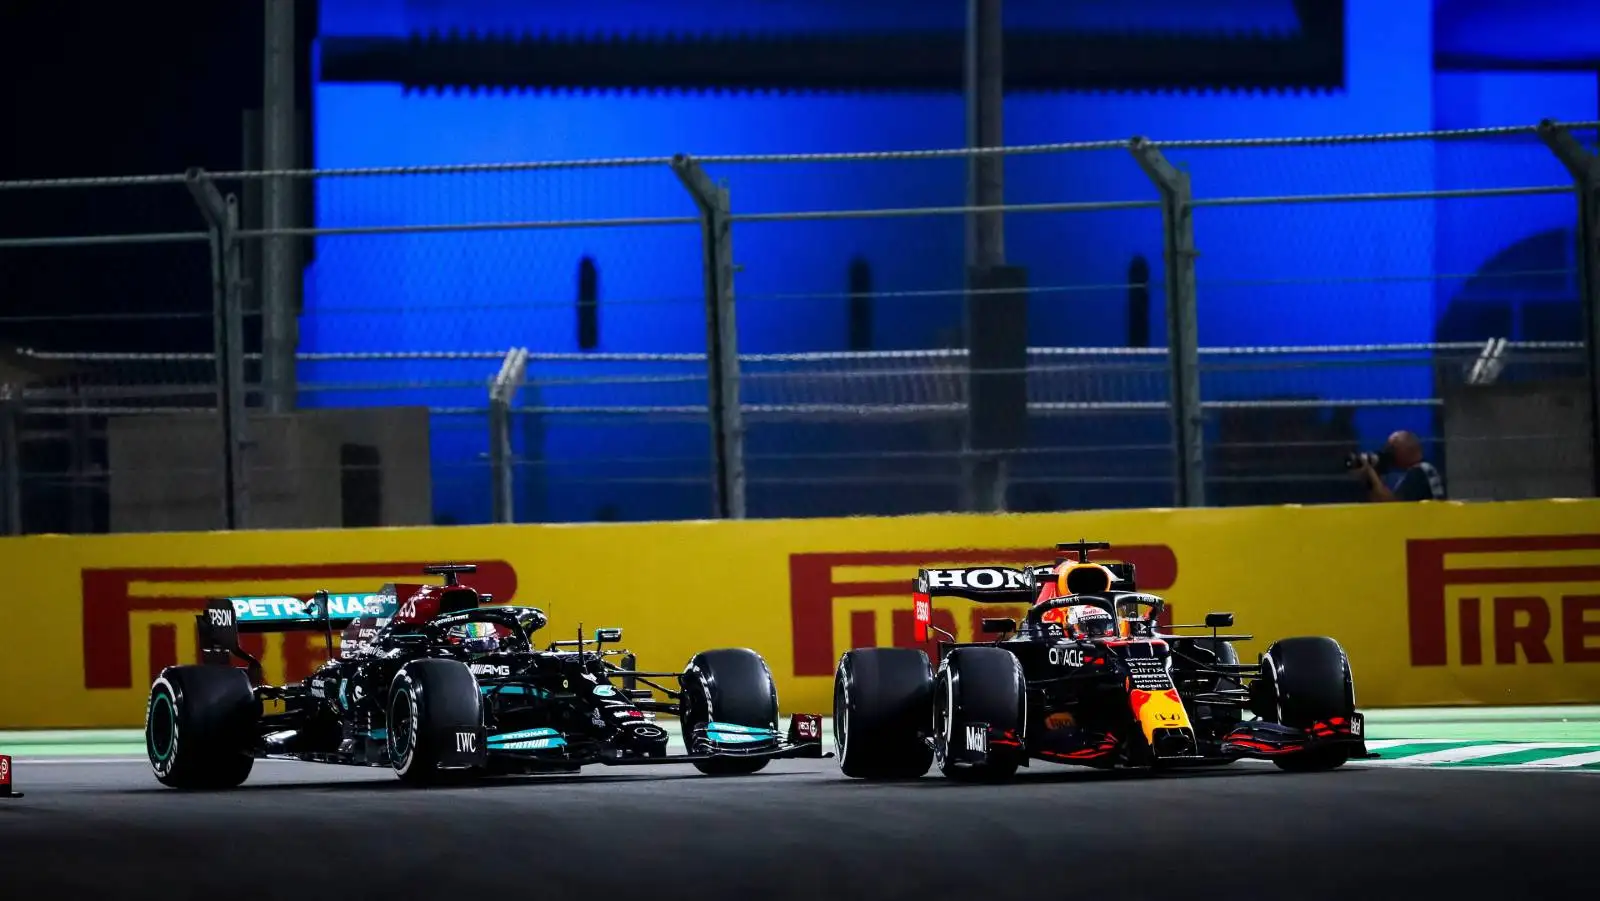 Max Verstappen just ahead of Lewis Hamilton. Jeddah December 2021.